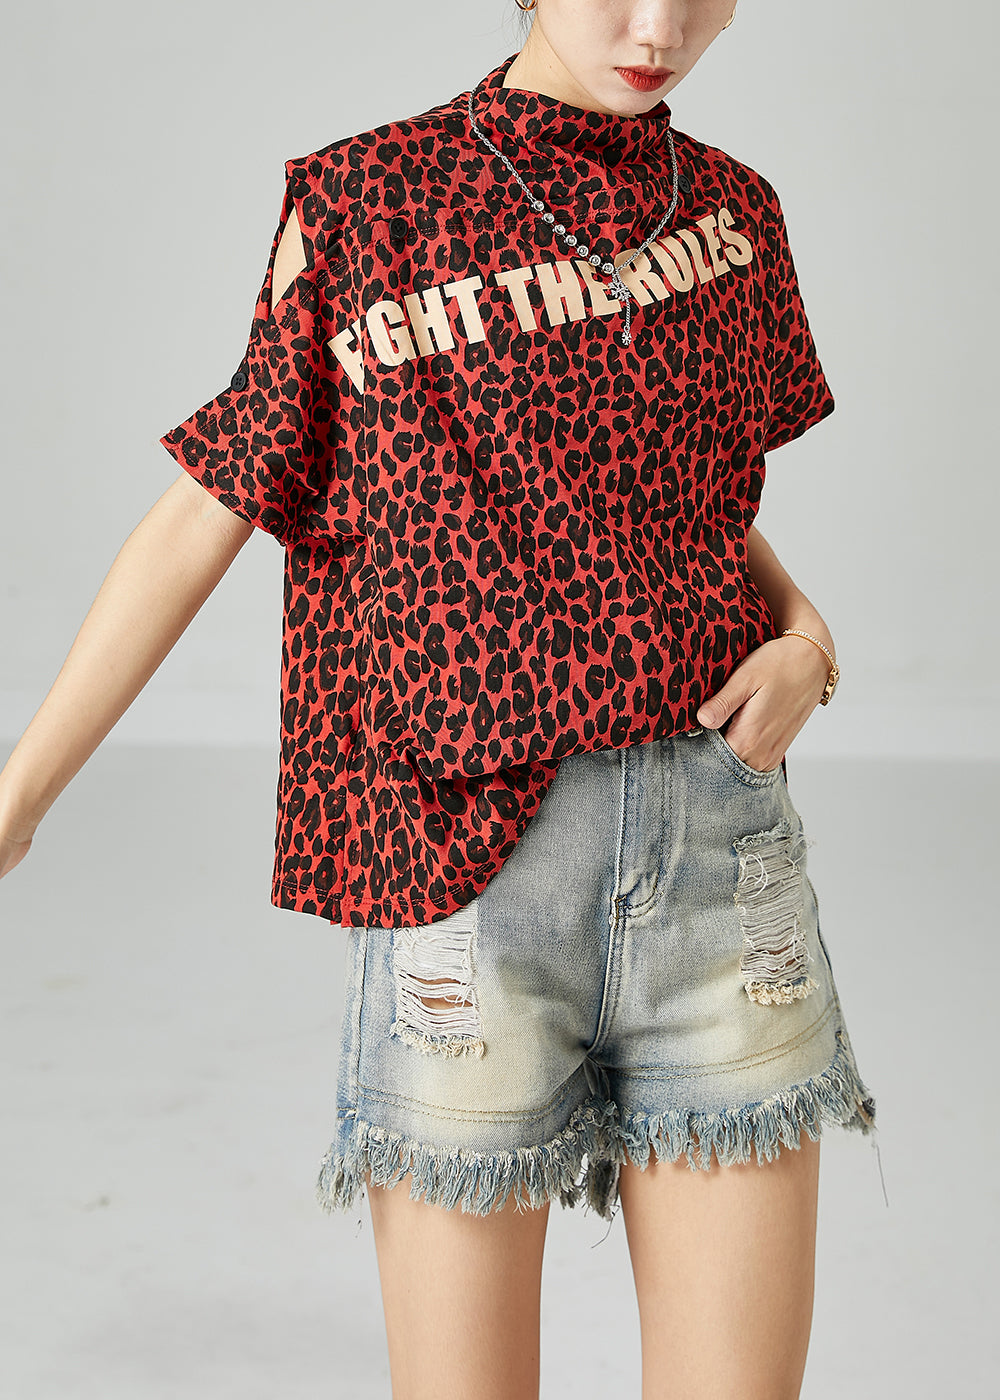 Red Leopard Print Cotton Tanks Stand Collar Cold Shoulder Summer